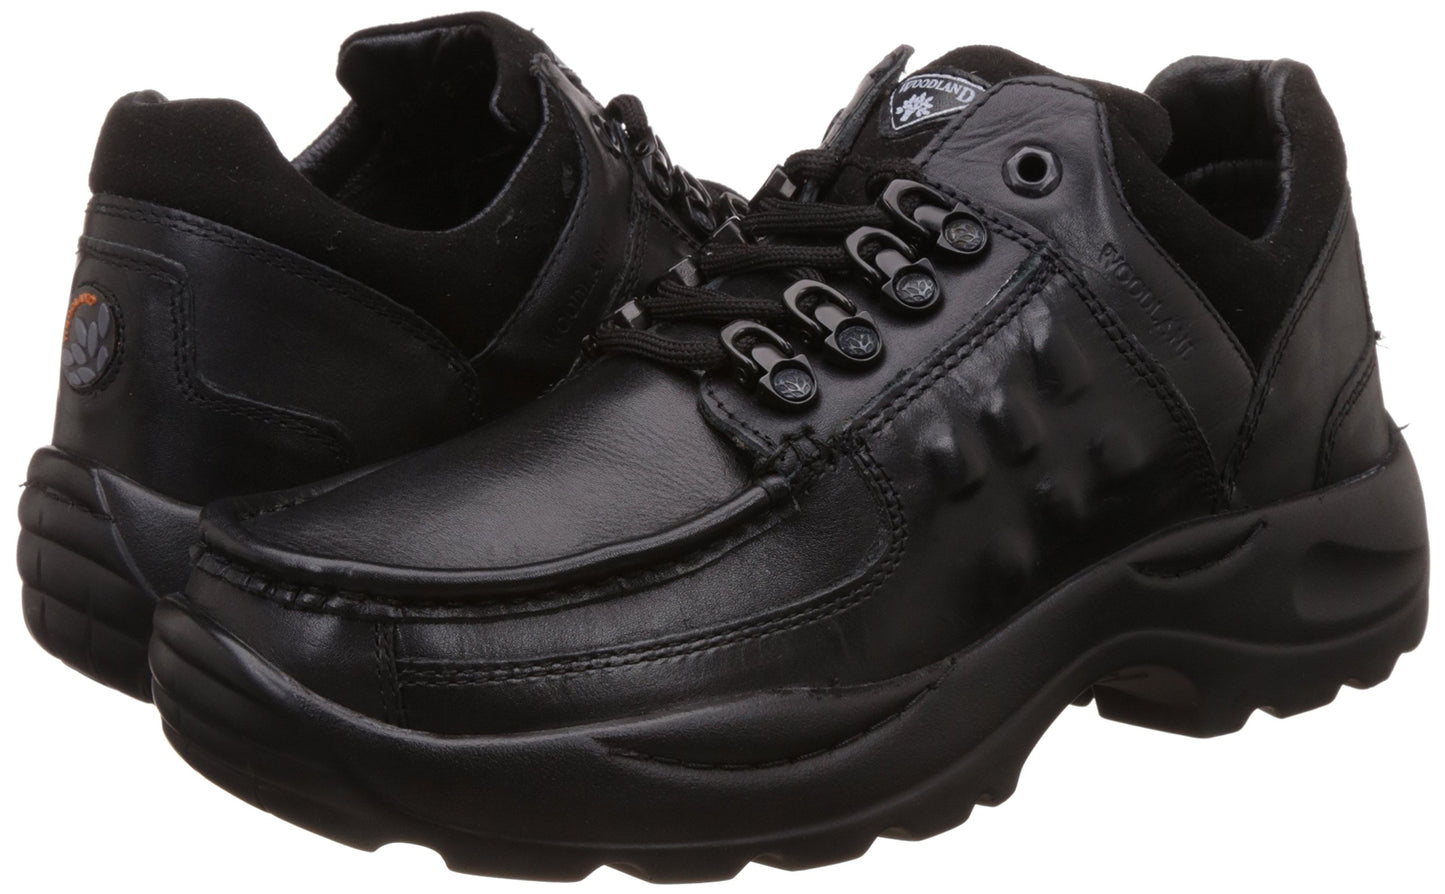 Woodland Men's Black Leather Casual Shoes-8UK (42 EU) (GC 0863110Y15)